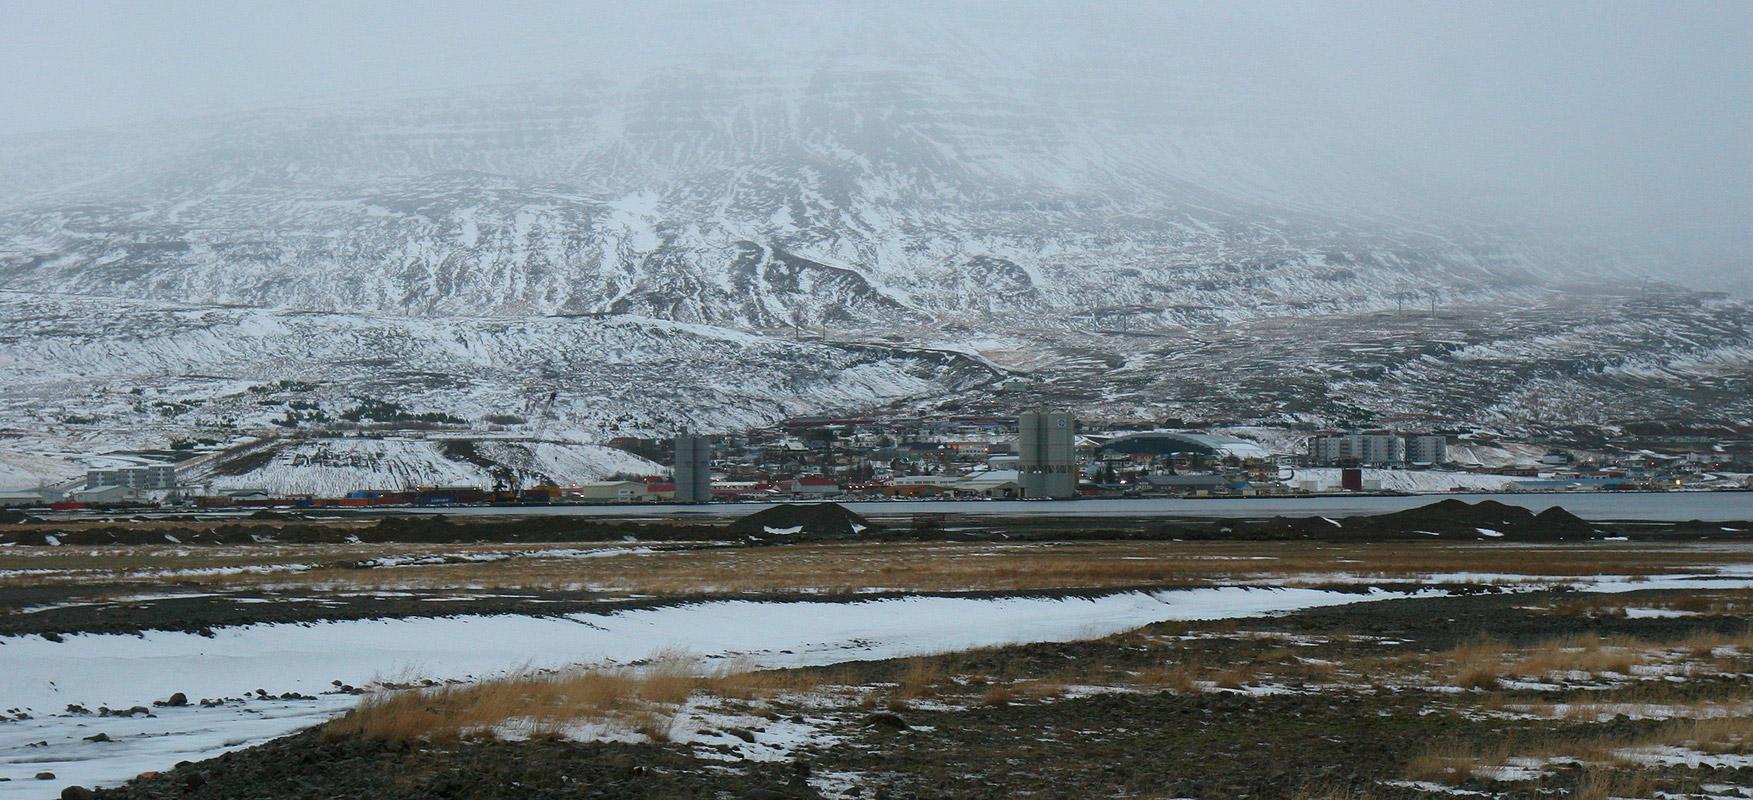 Reyðarfjörður is one of the most populated towns in East Iceland.